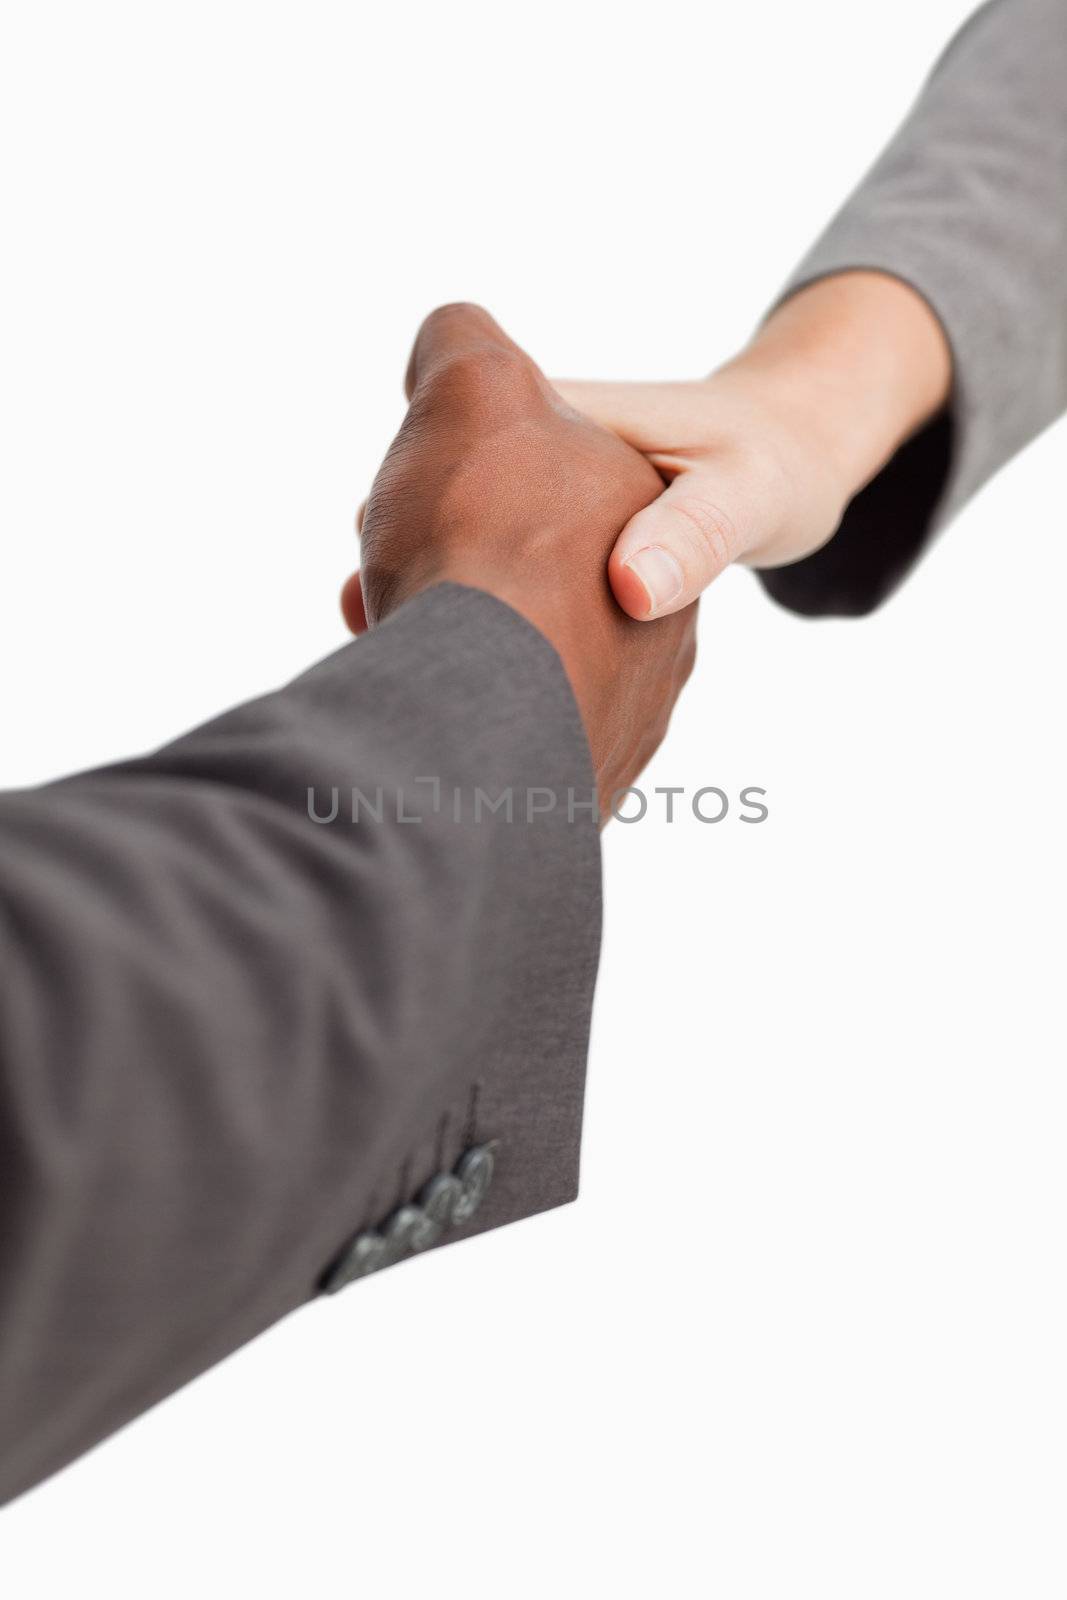 Businesspeople shaking hands by Wavebreakmedia